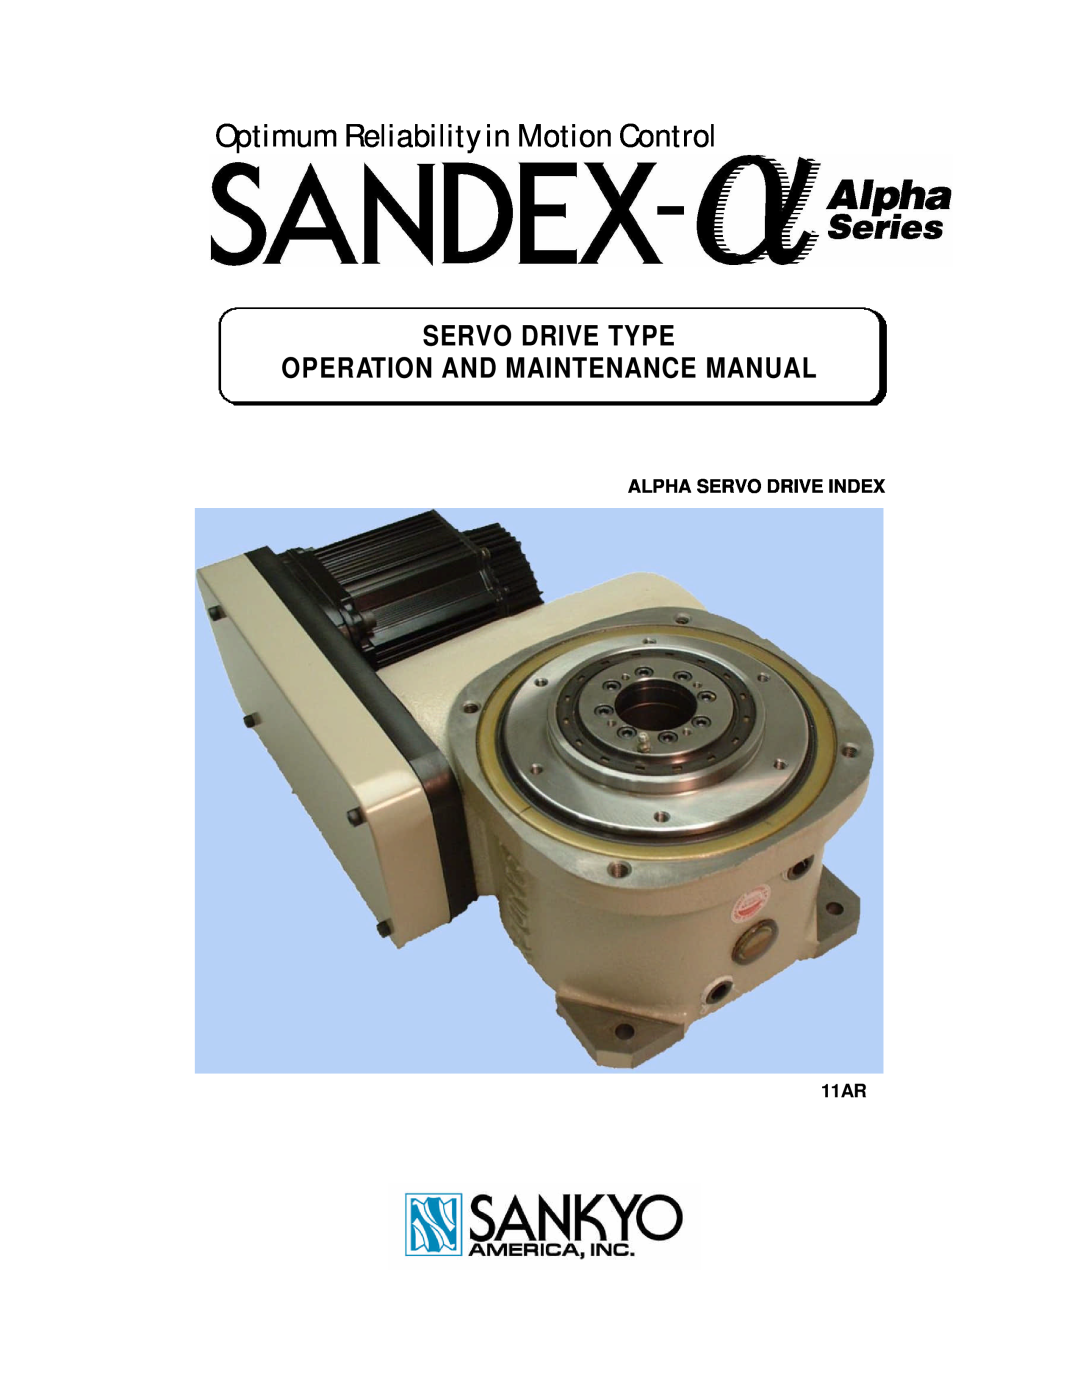 Sankyo 11AR manual Optimum Reliability in Motion Control, Servo Drive Type Operation And Maintenance Manual 